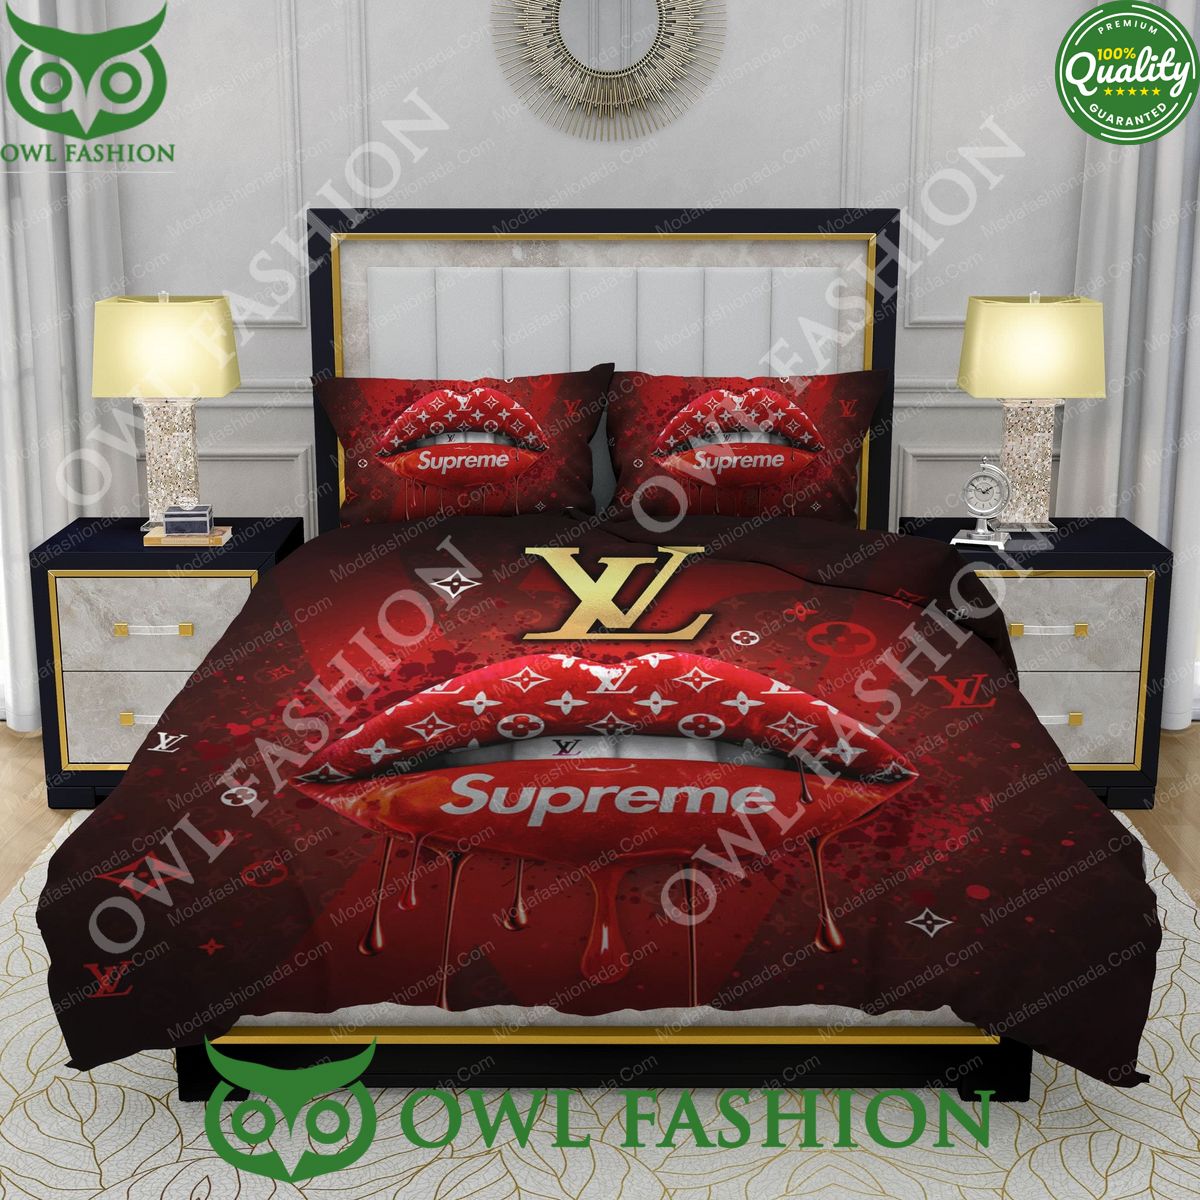 supreme luxury louis vuitton logo bedding sets 1 M30Sw.jpg